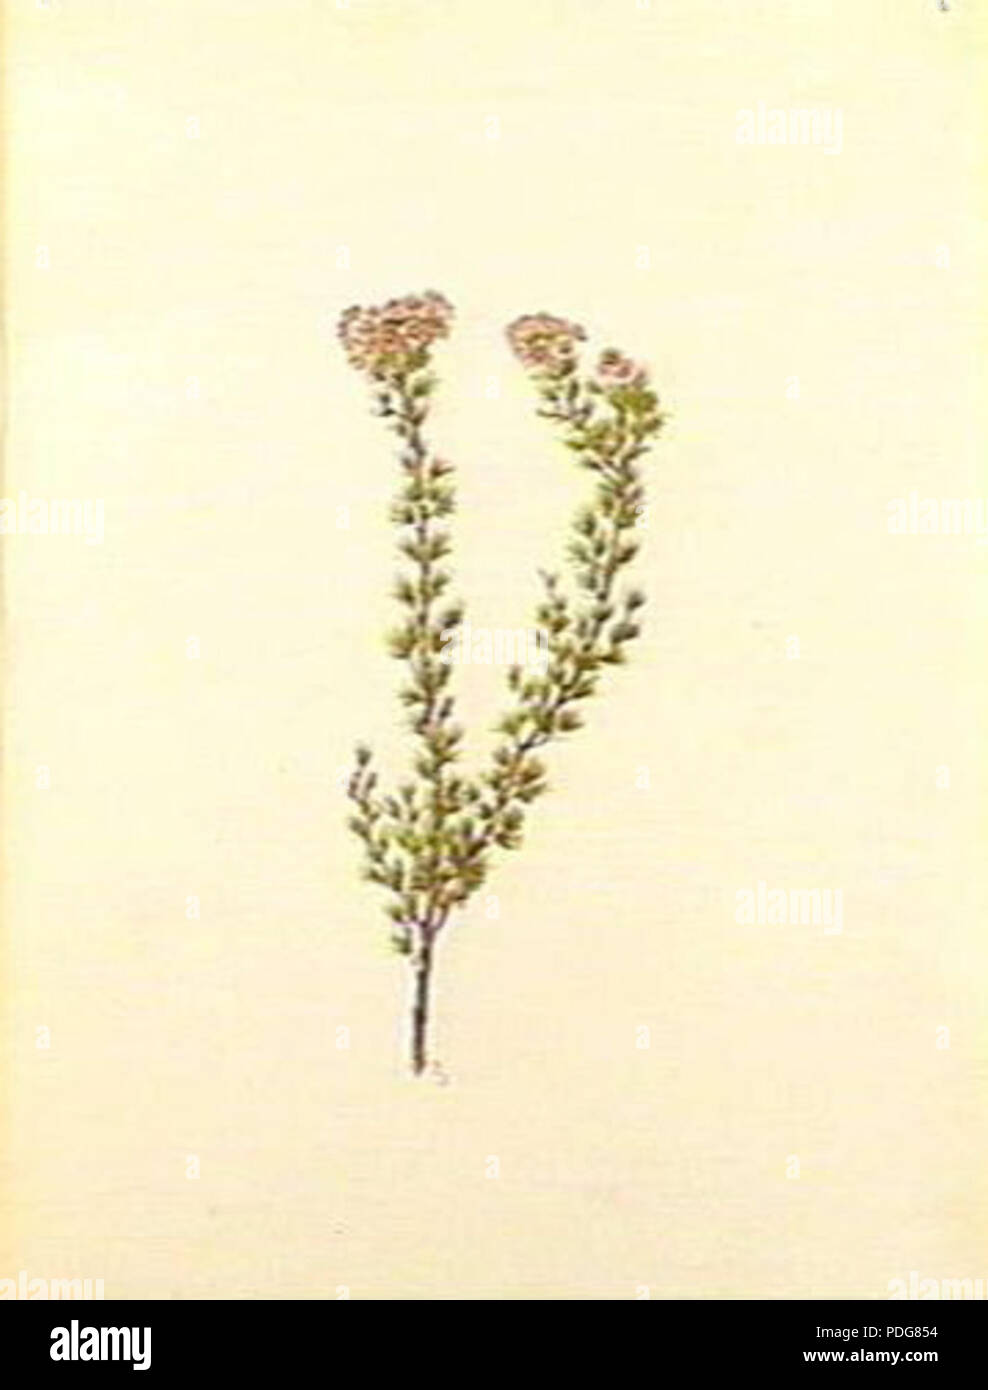 318 Verticordia brownii (Forster) Stock Photo